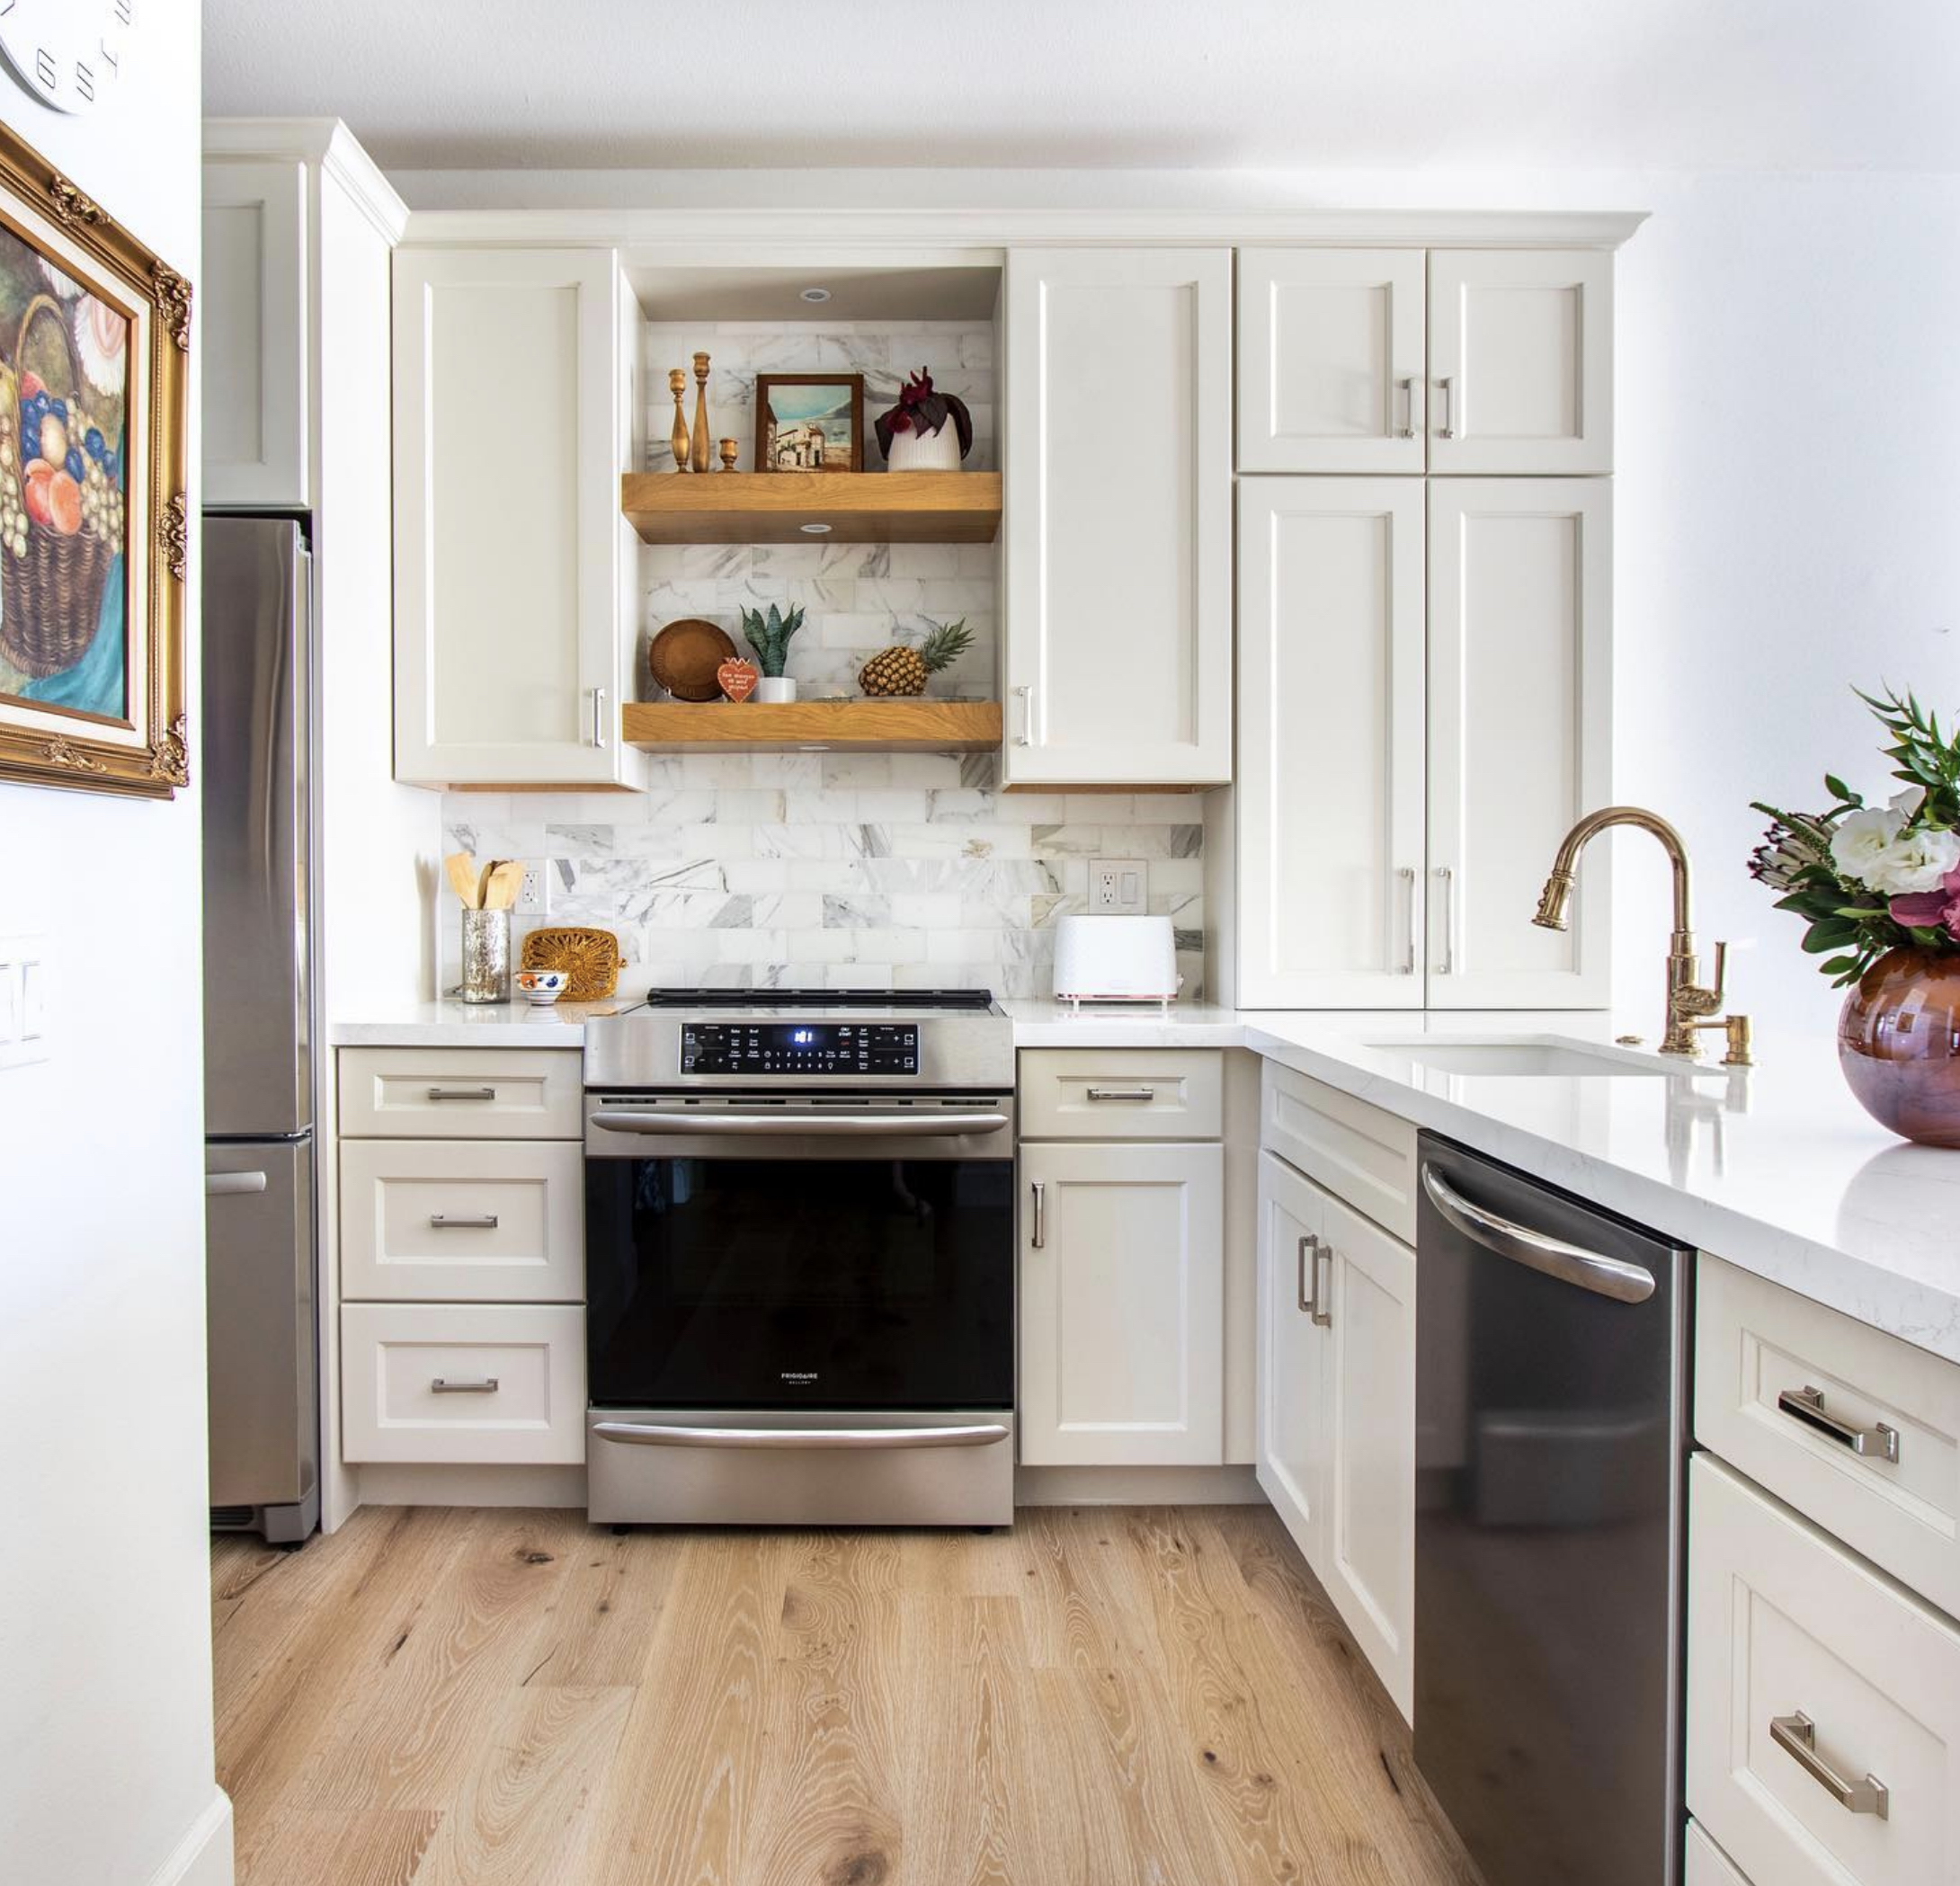 kitchen cabinets painted bm edgecomb gray hc-173